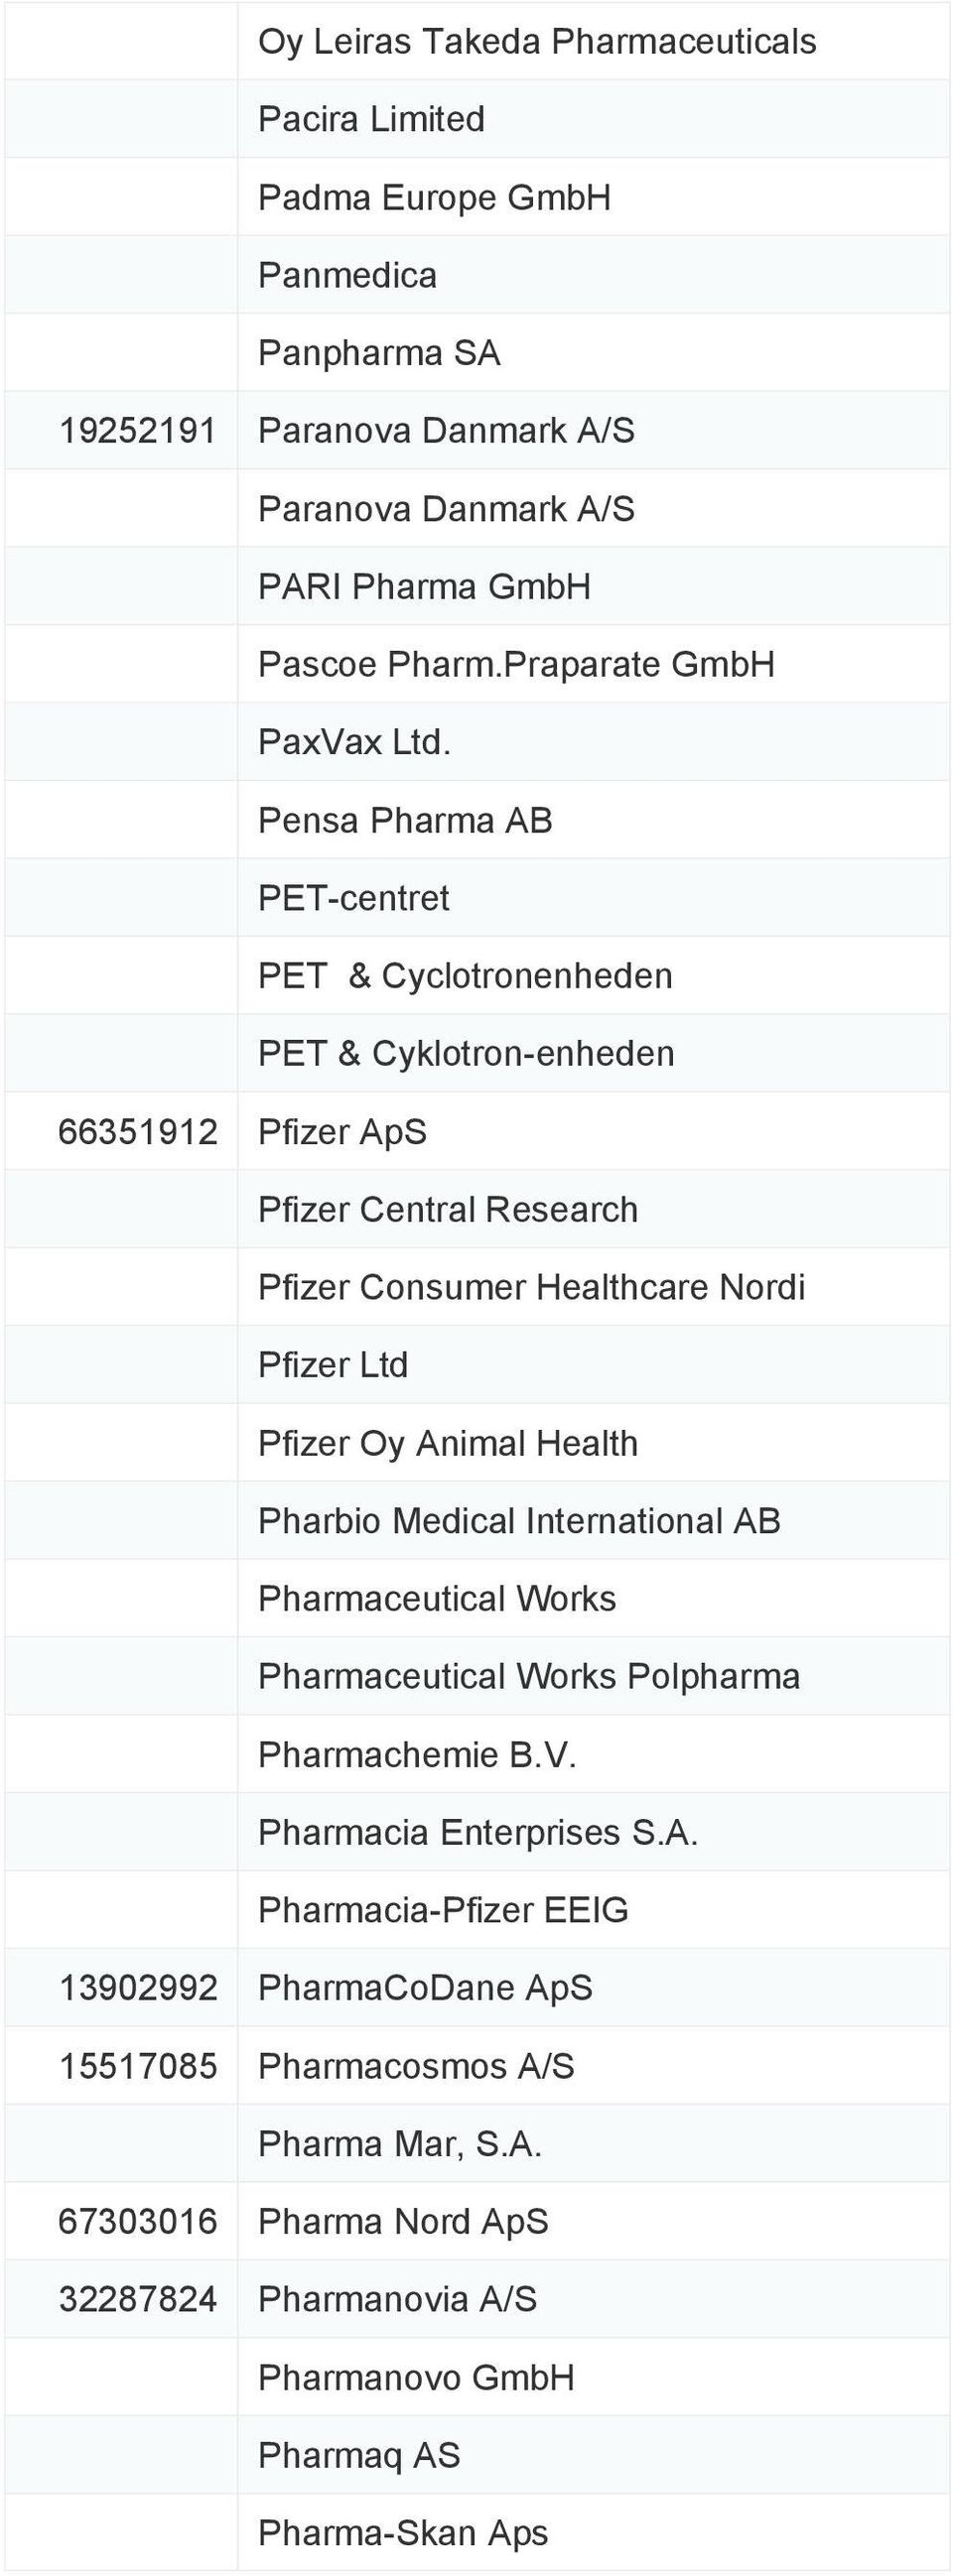 Pensa Pharma AB PET-centret PET & Cyclotronenheden PET & Cyklotron-enheden 66351912 Pfizer ApS Pfizer Central Research Pfizer Consumer Healthcare Nordi Pfizer Ltd Pfizer Oy